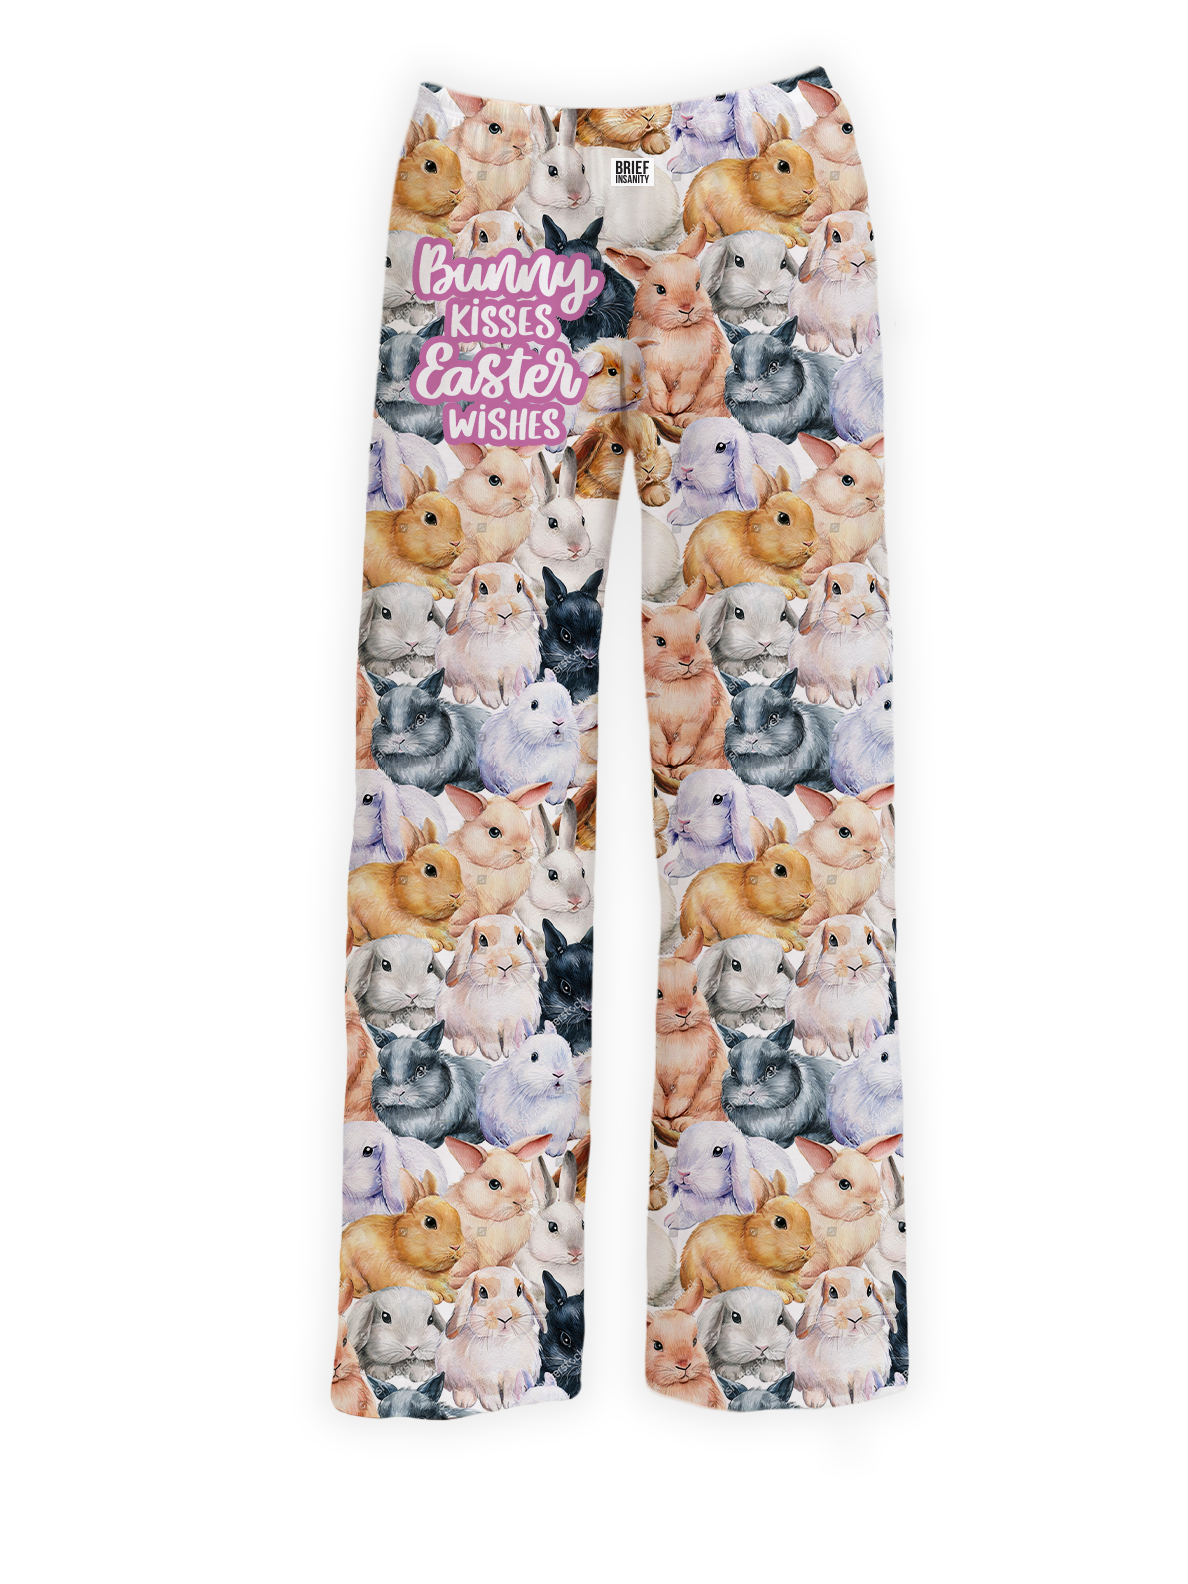 Soft Plush Pajama Pants - Small bears